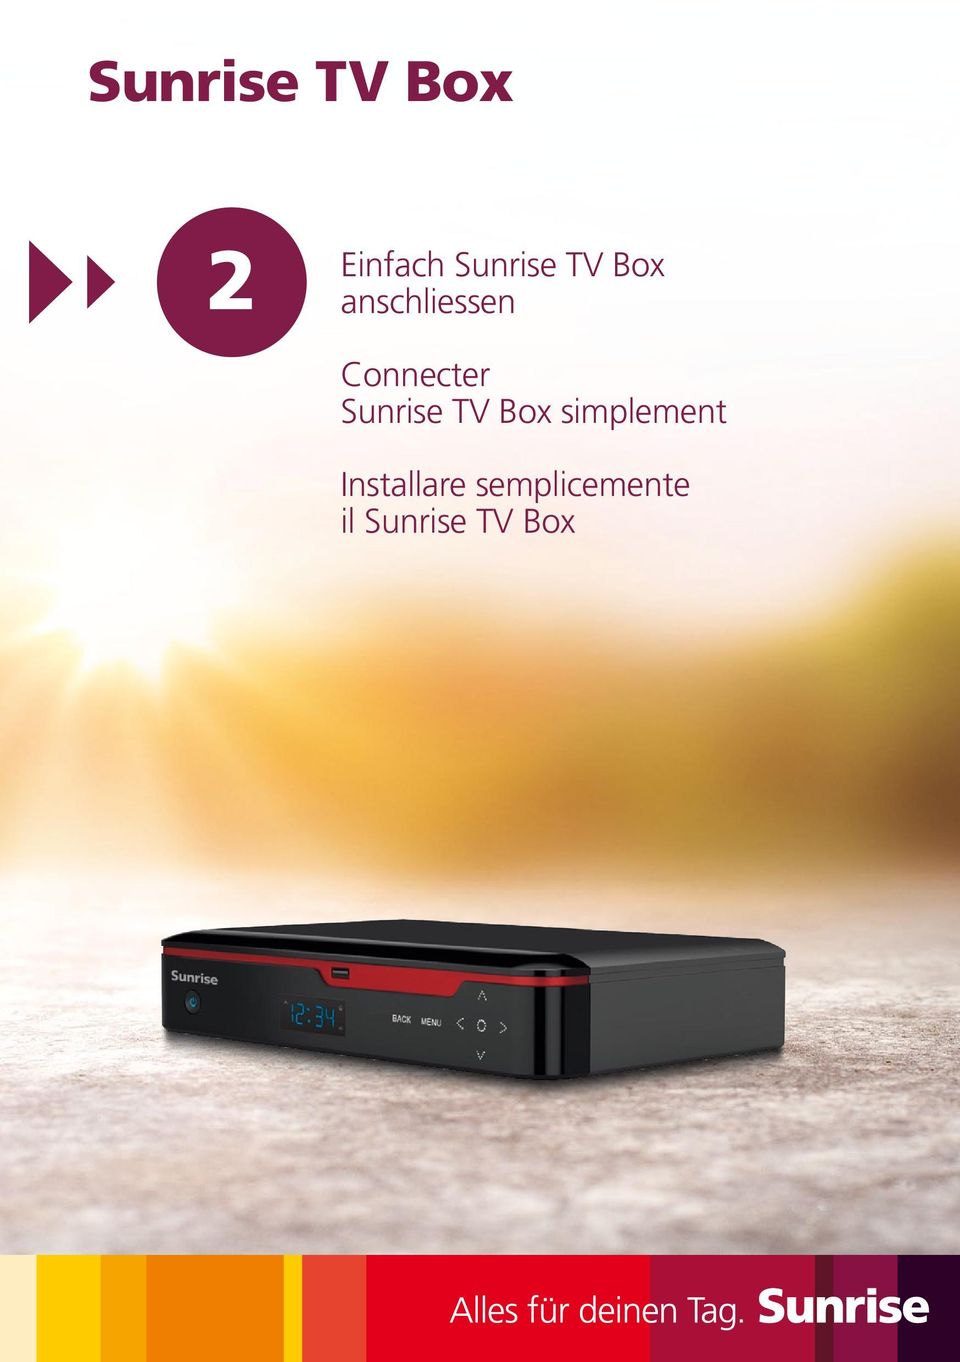 Sunrise TV Box simplement